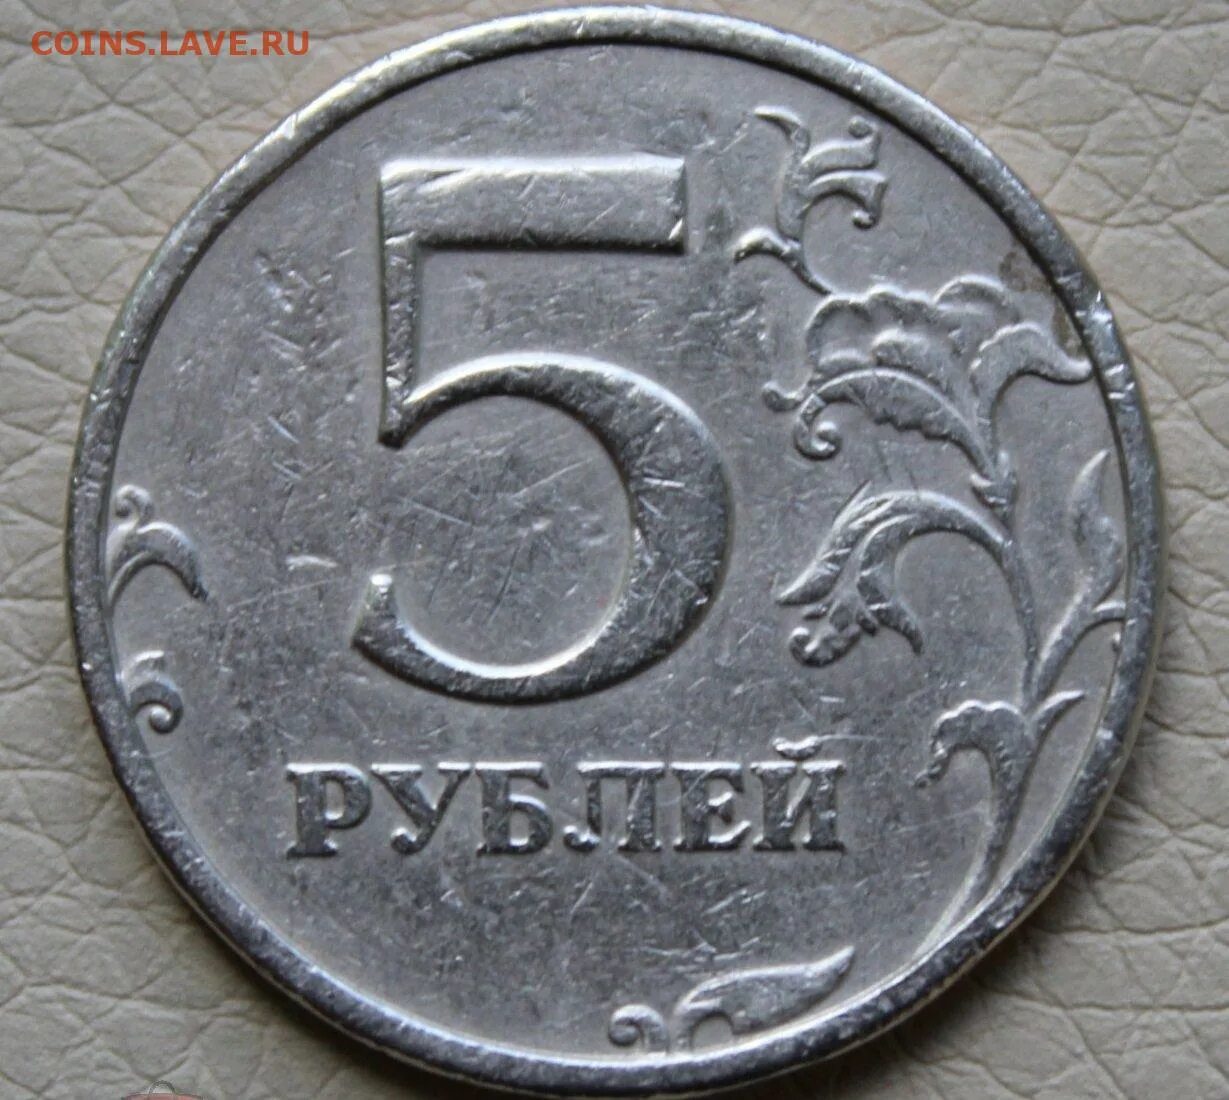 5 Рублей 1999 СПМД. 5 Рублей 2000 СПМД. 5 Рублевая монета 1999 года.